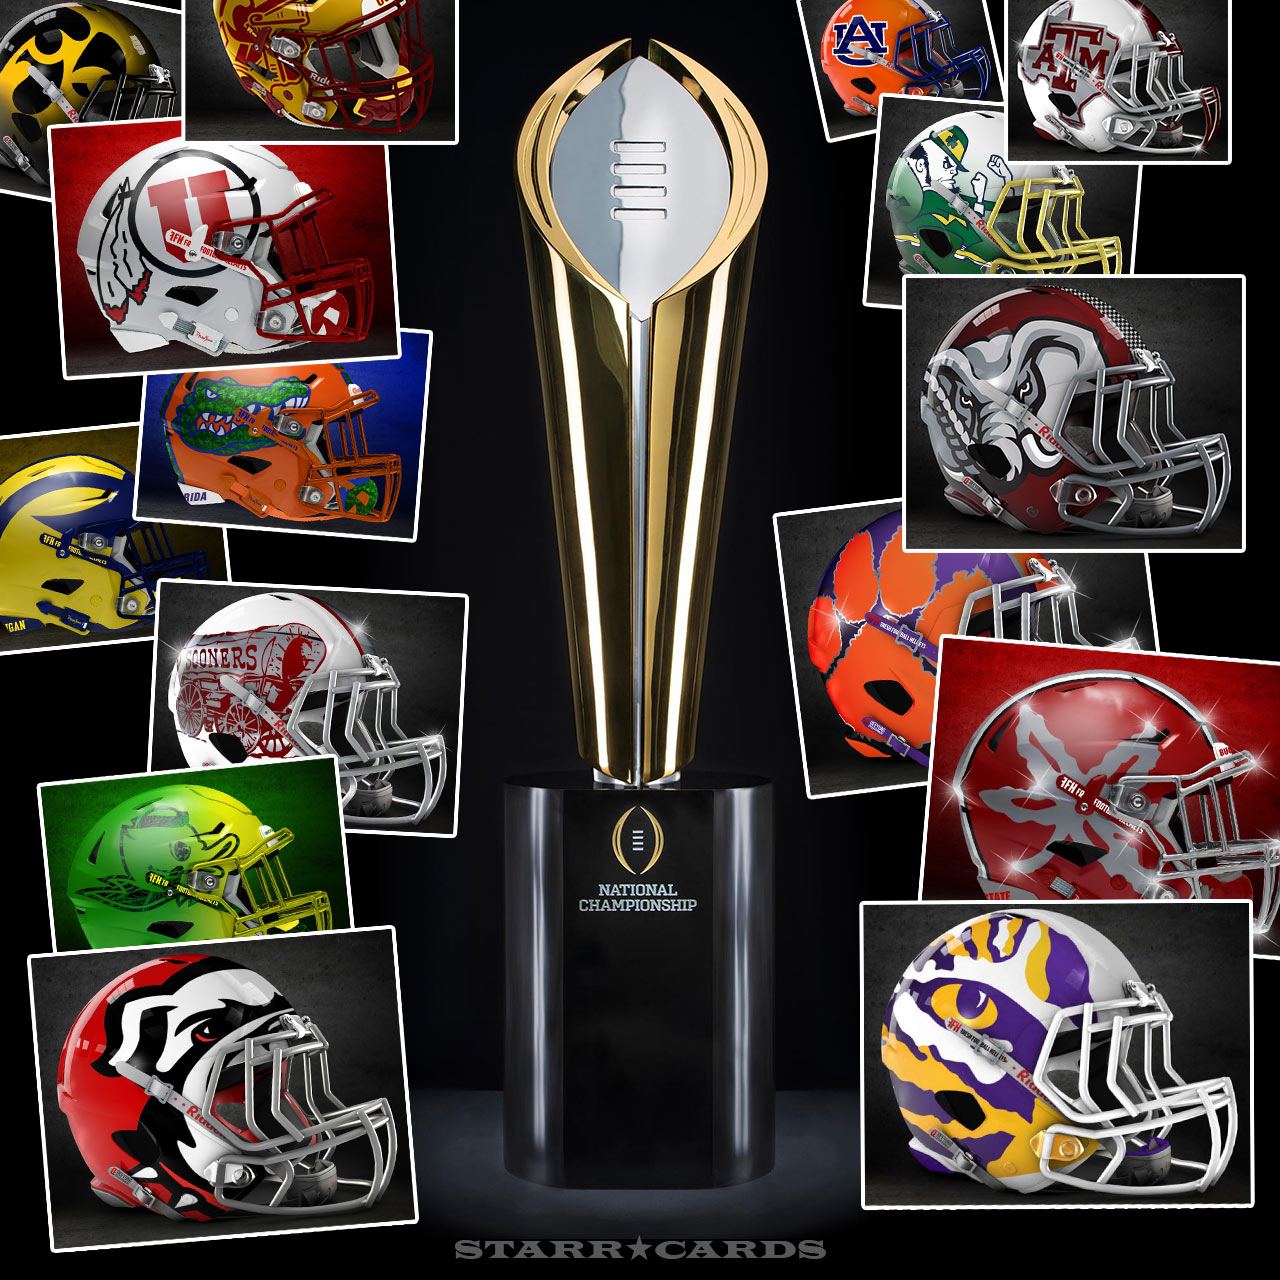 College Football Playoff rankings illustrated with alternate football helmet designs